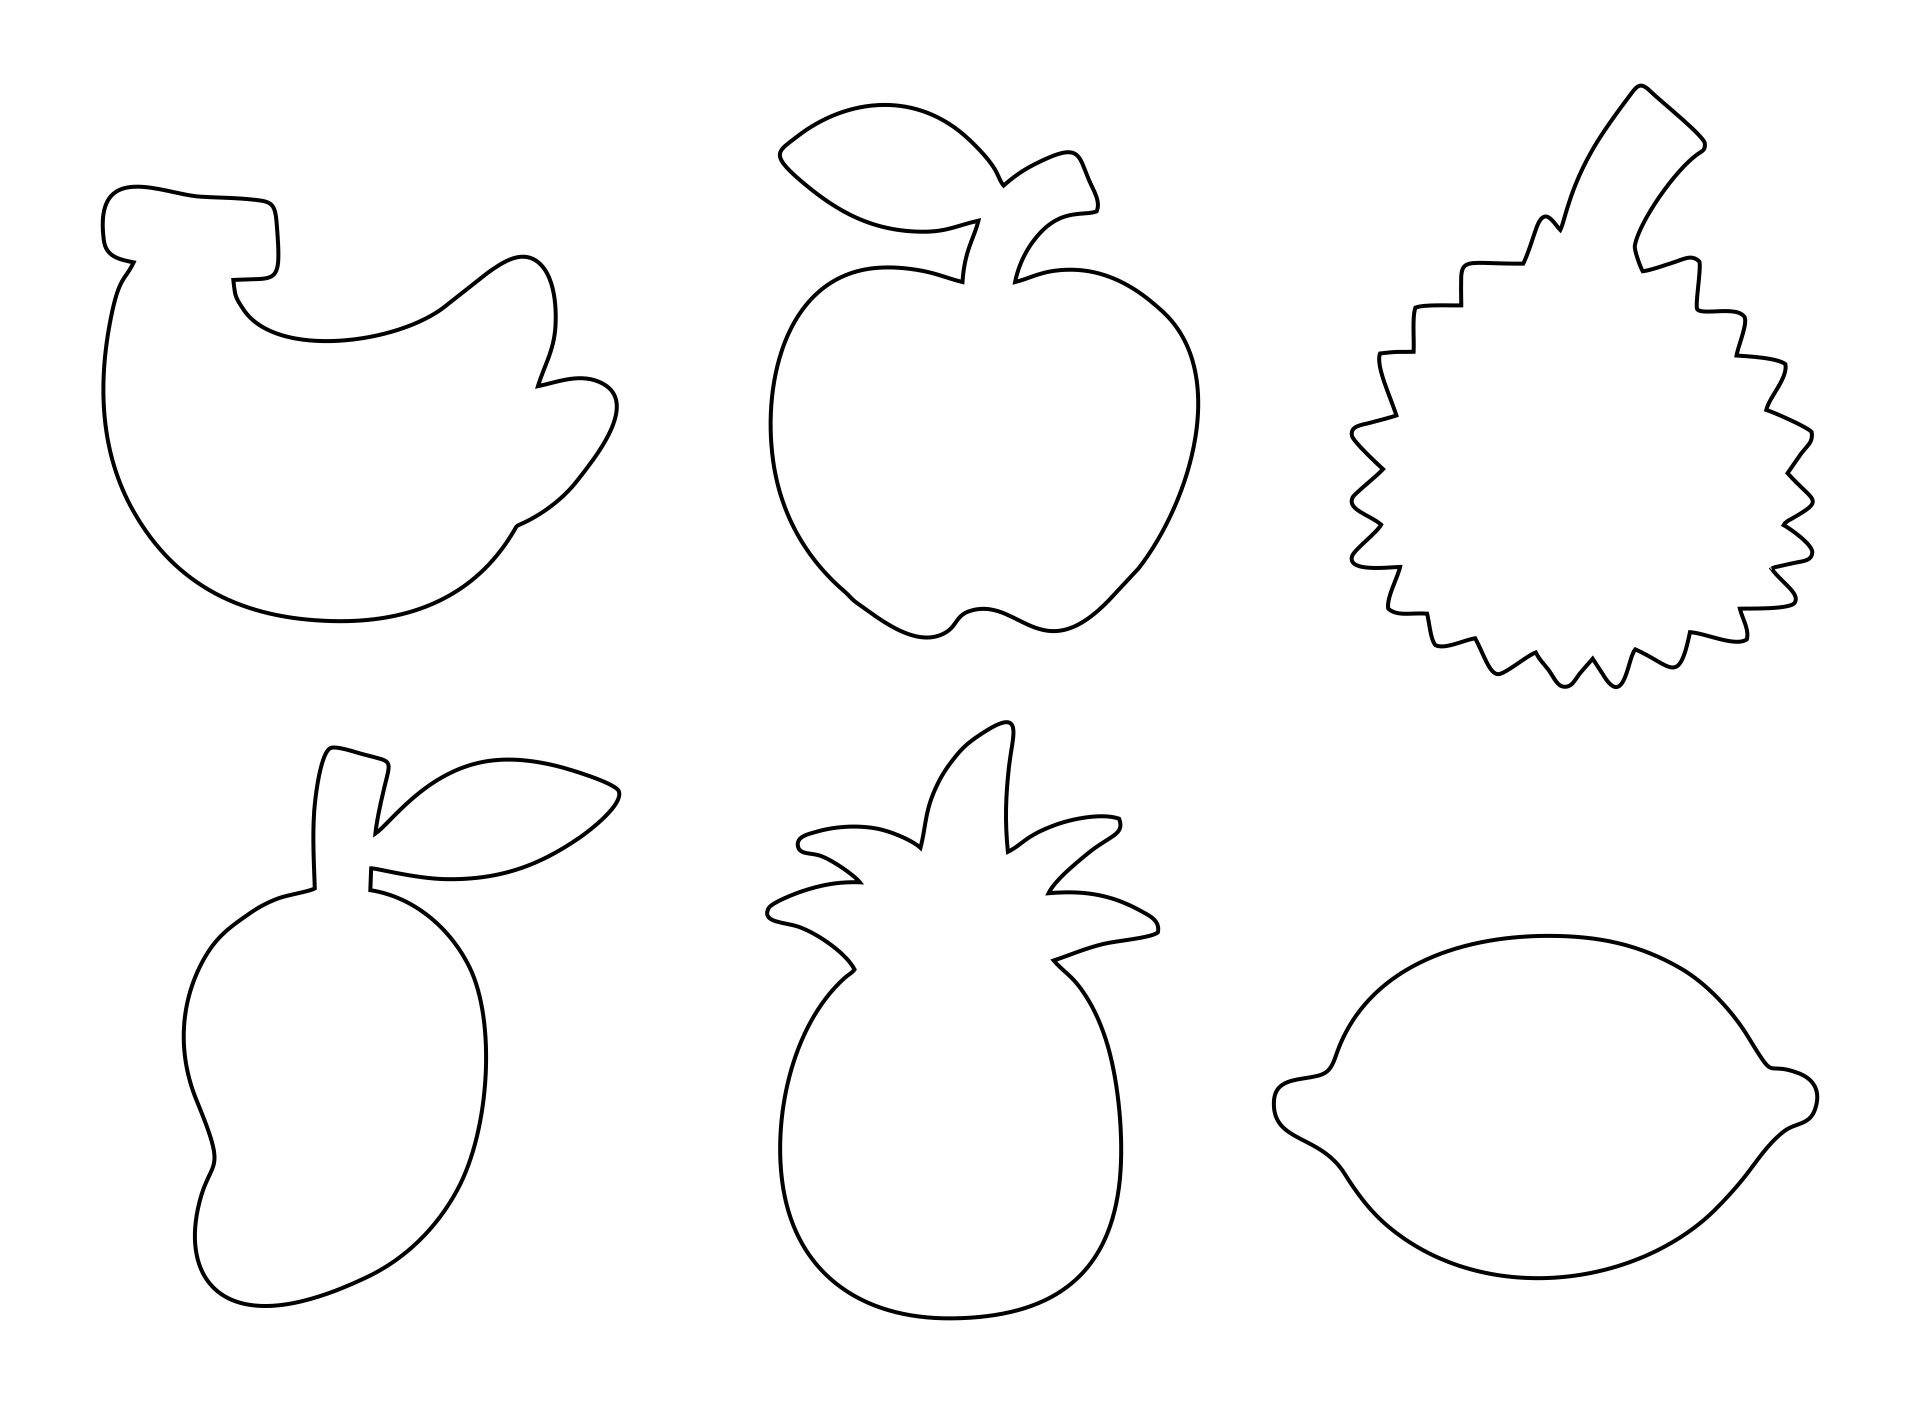 5 Best Images of Fruit Cutouts Printable Fruit Cut Out Shapes, Fruit